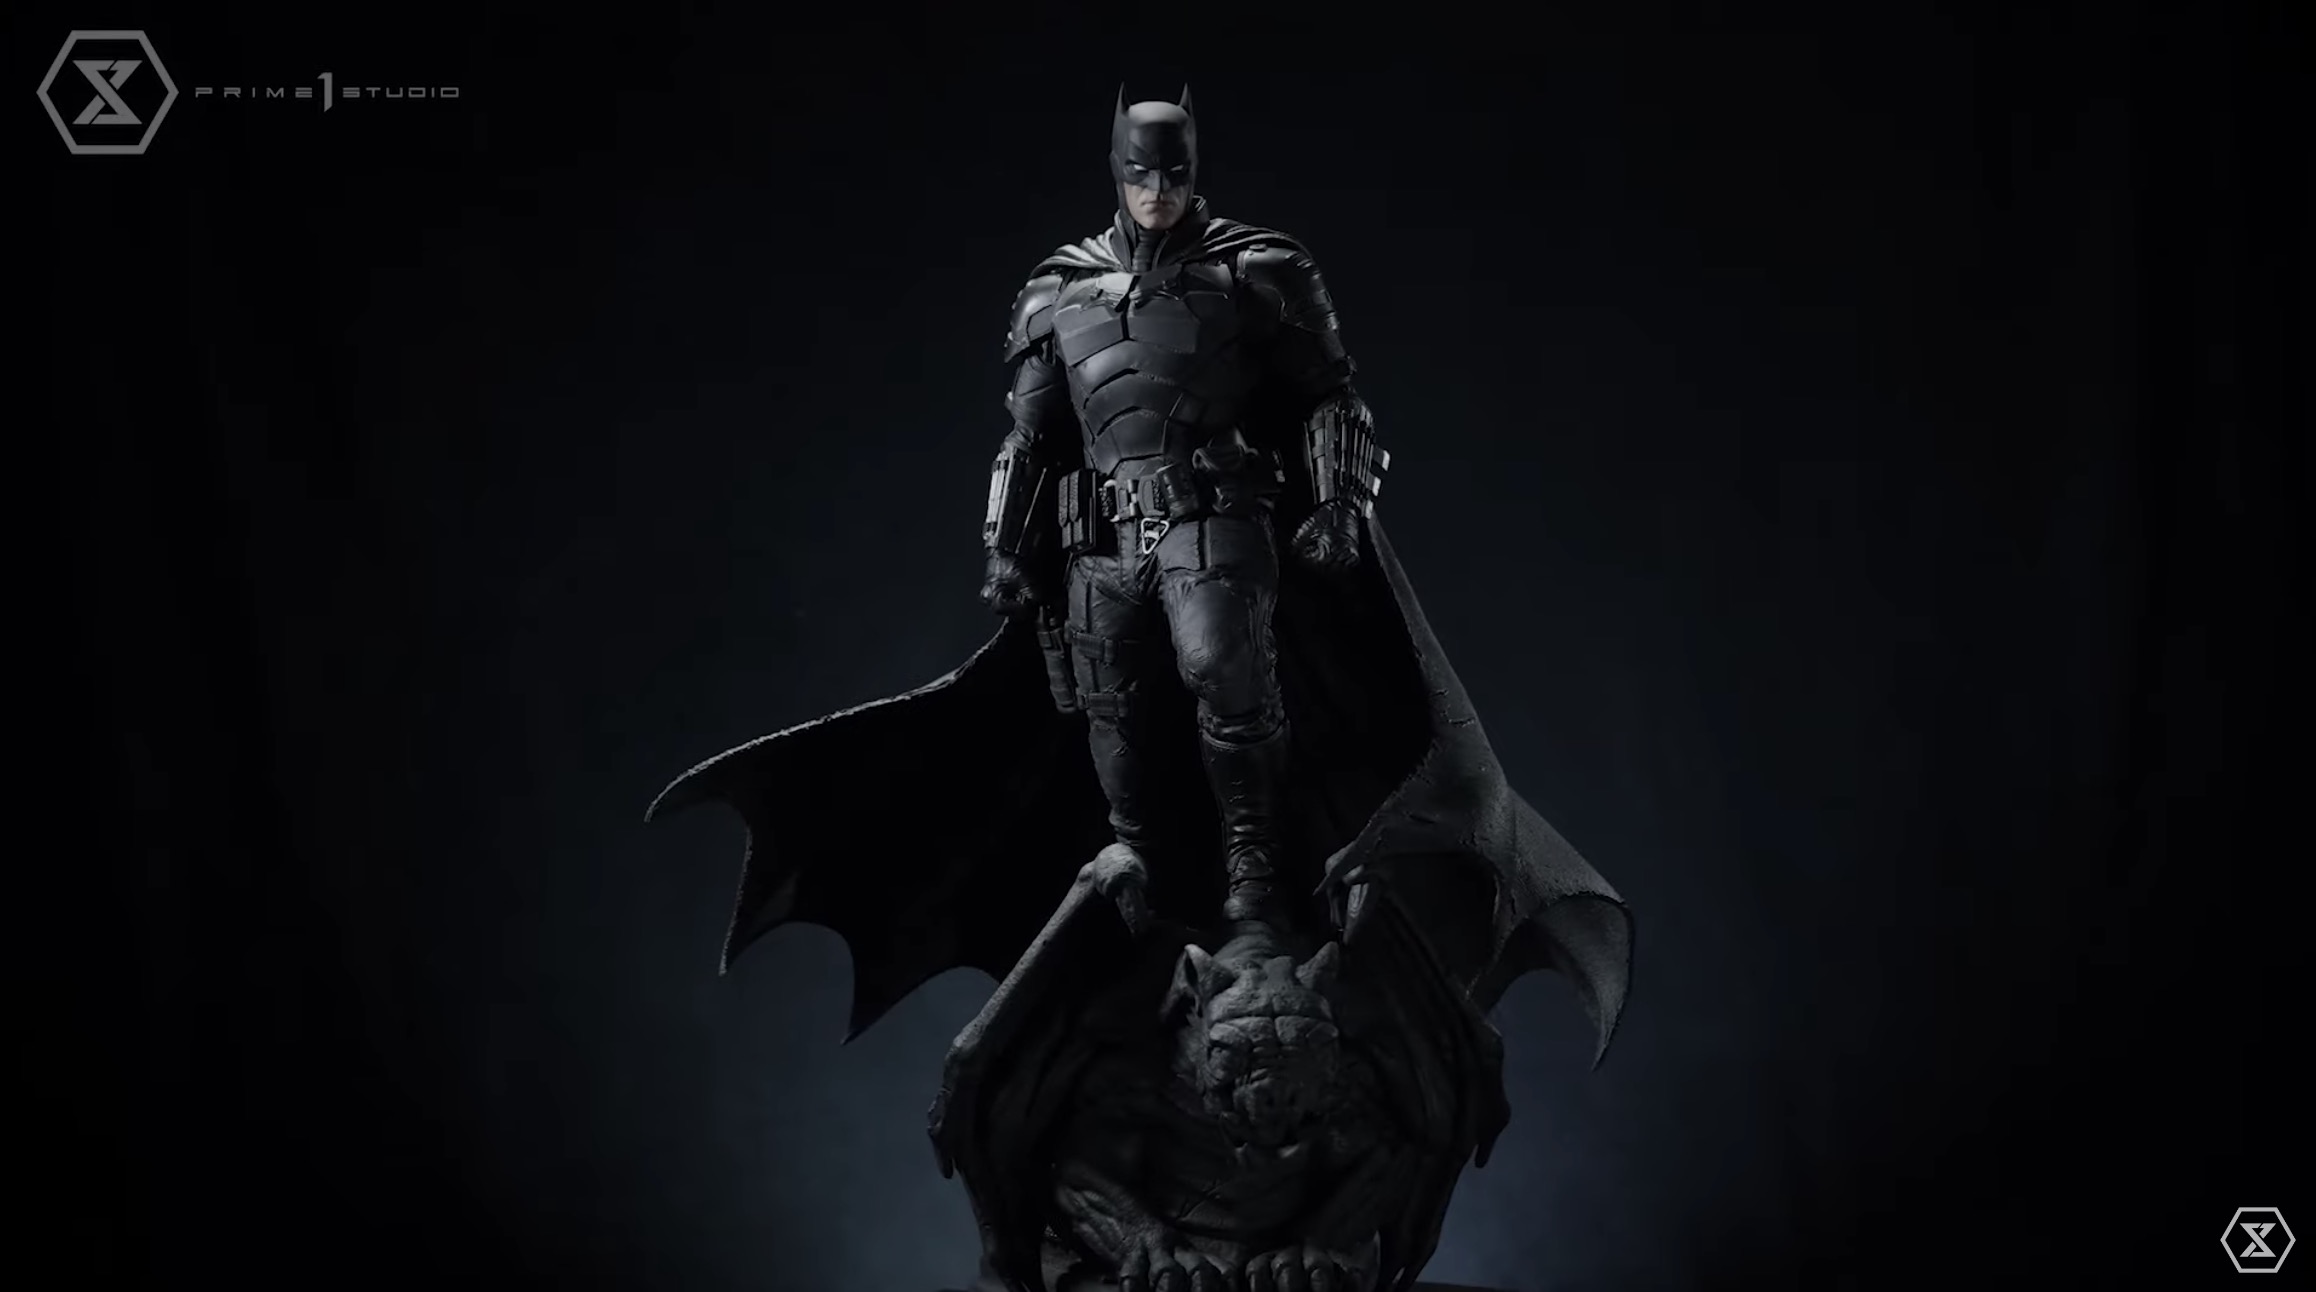 Statue Offers Most Detailed Version of Robert Pattinson's Batman so Far